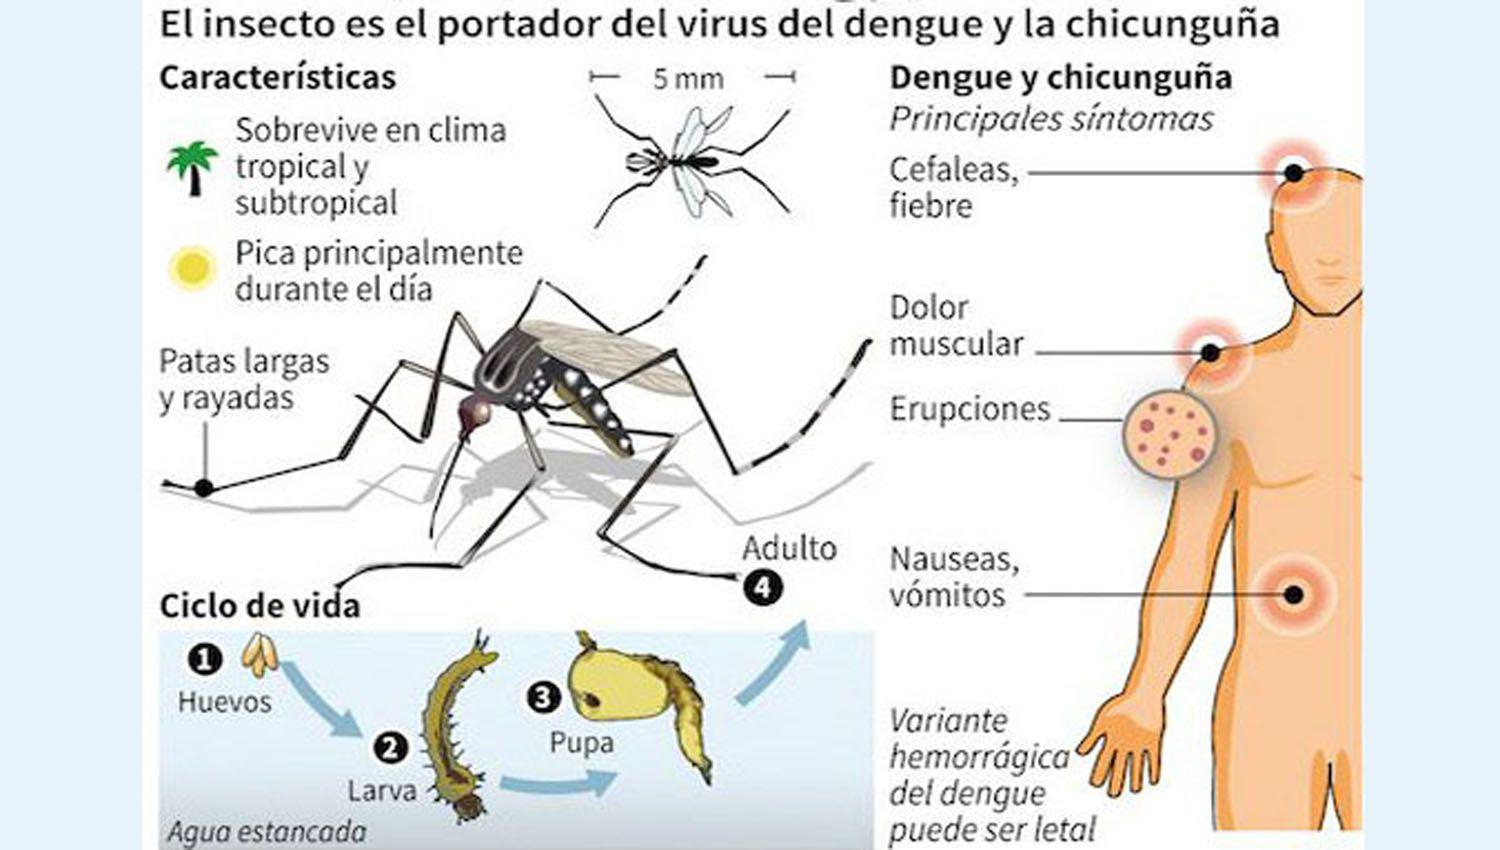 Se confirmaron maacutes de 28 mil casos de dengue en el paiacutes